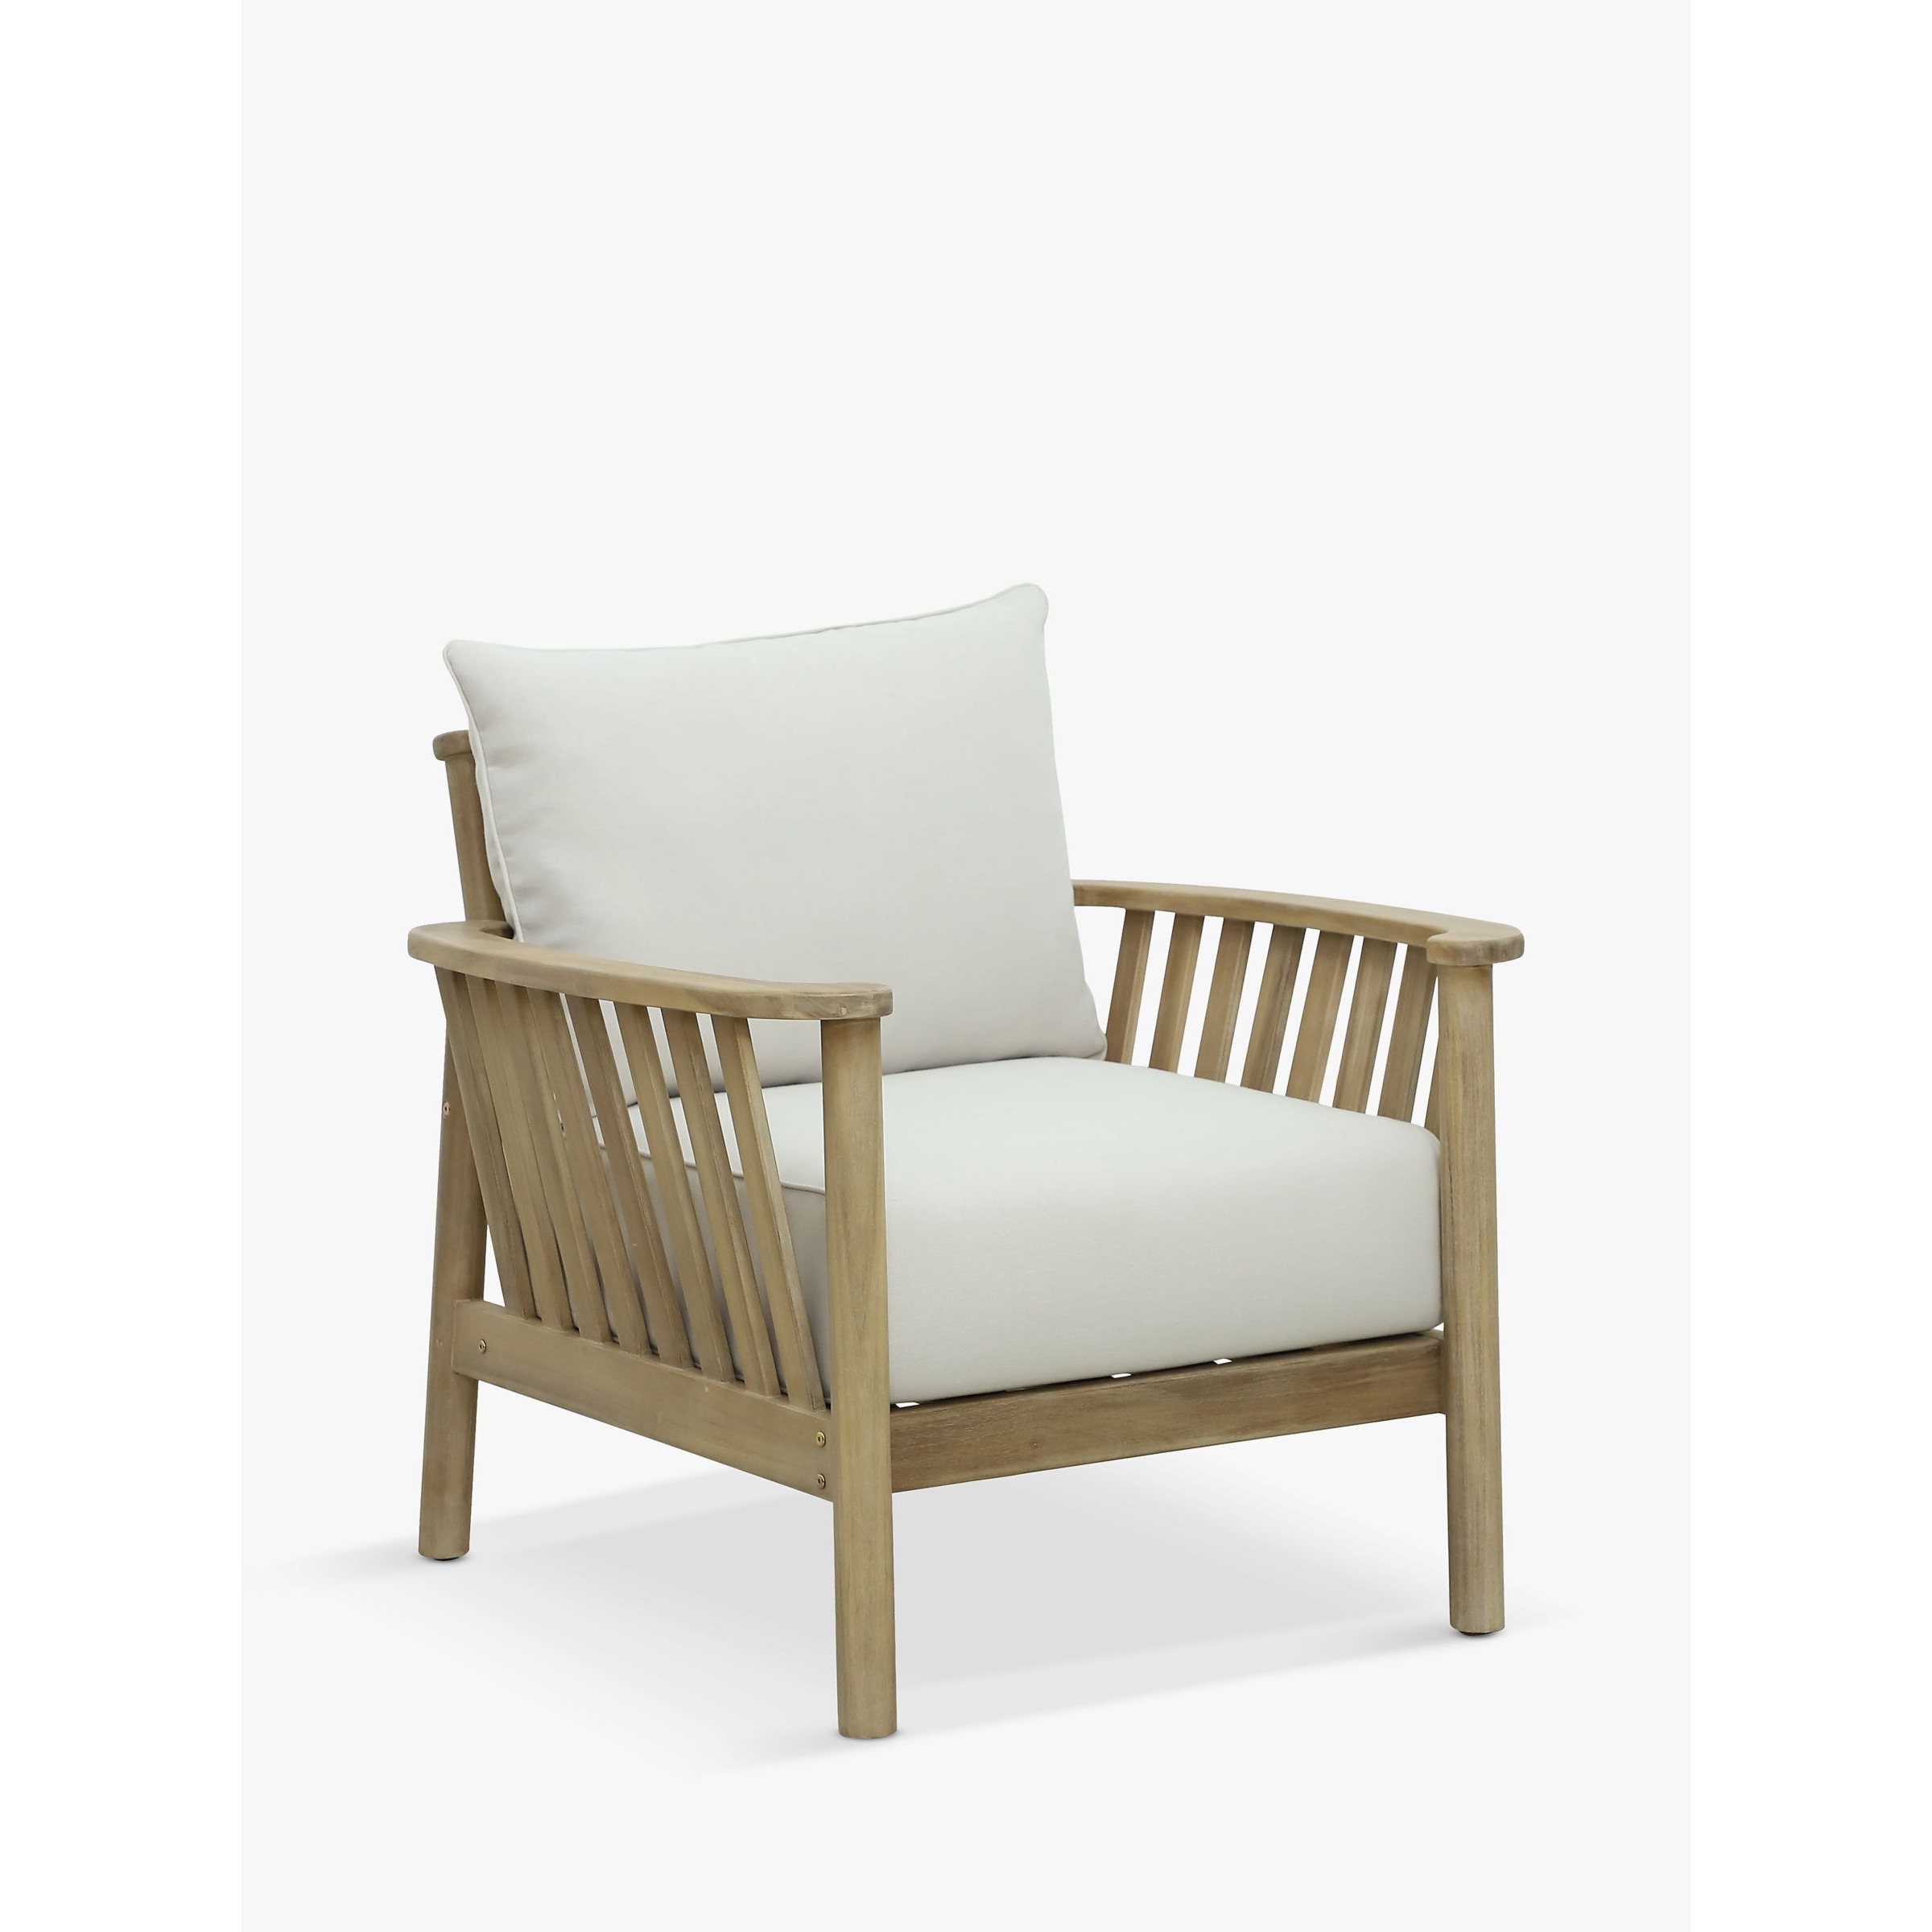 John Lewis Boardwalk Garden Lounge Chair, FSC-Certified (Acacia Wood), Natural - image 1